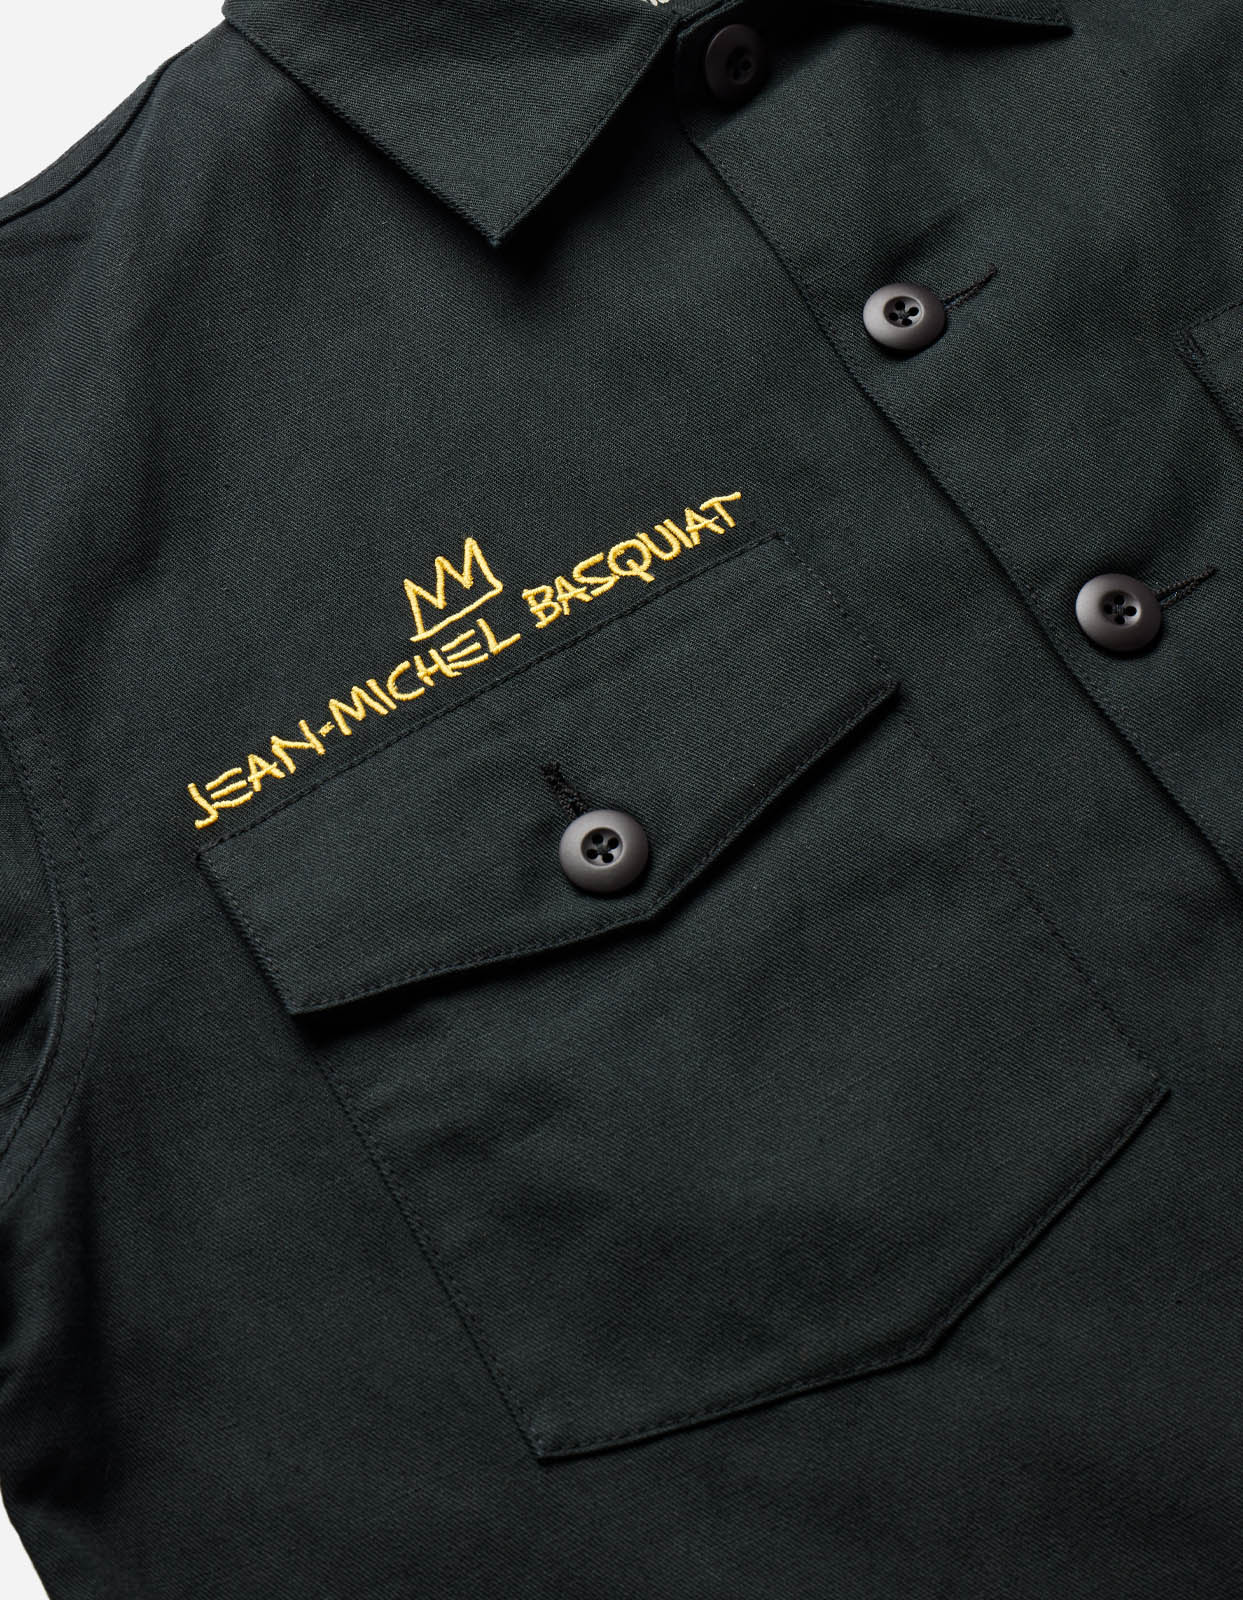 5124 Pez Dispenser Mill Shirt · Maharishi x Jean-Michel Basquiat Black